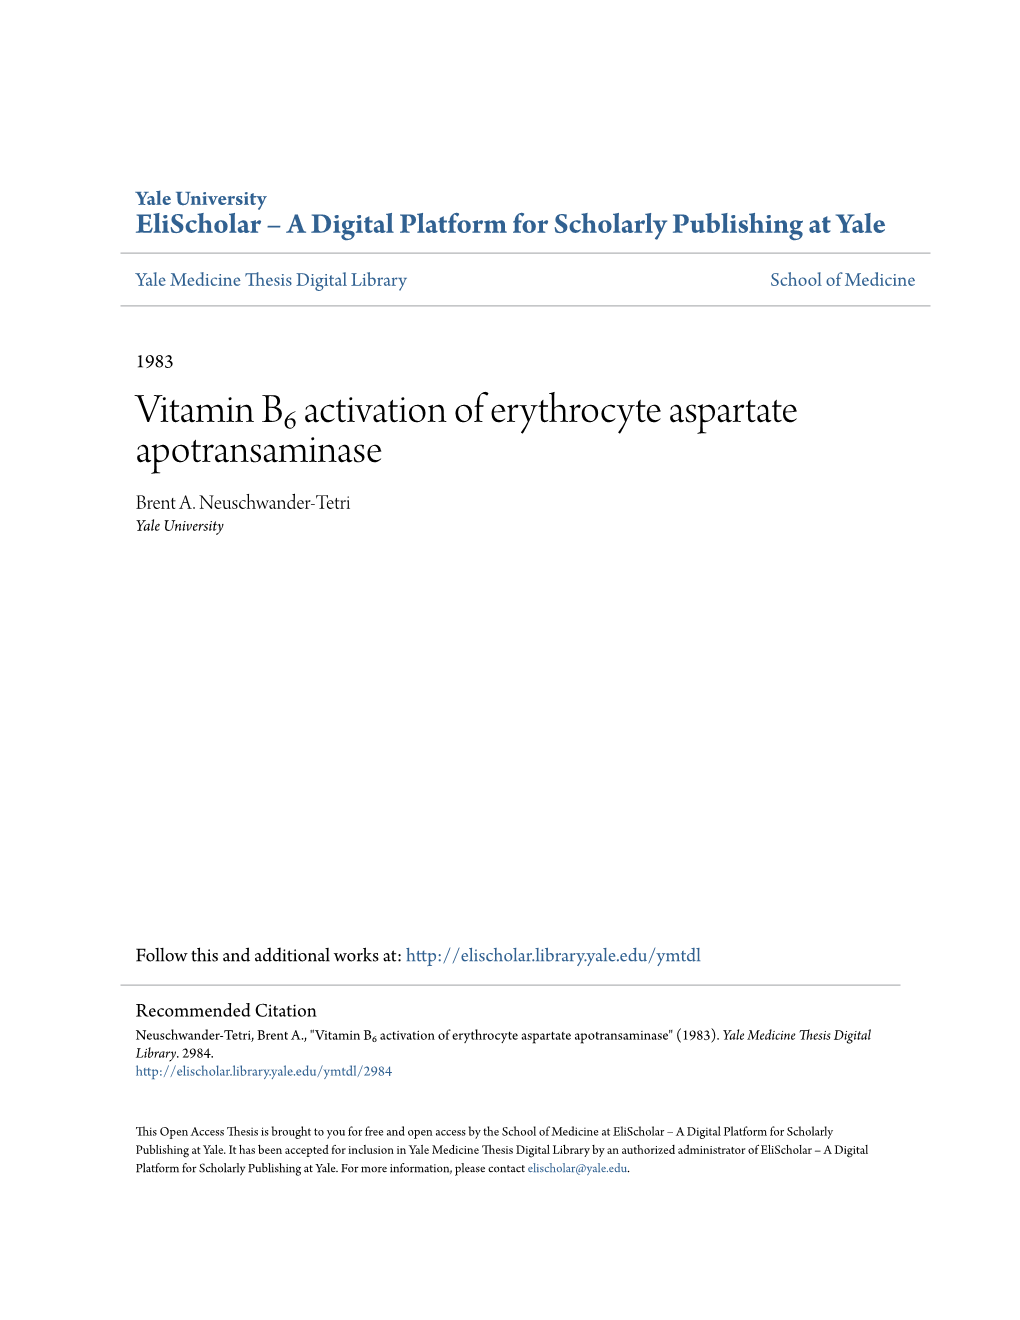 Vitamin Bâ‡Ƒ Activation of Erythrocyte Aspartate Apotransaminase